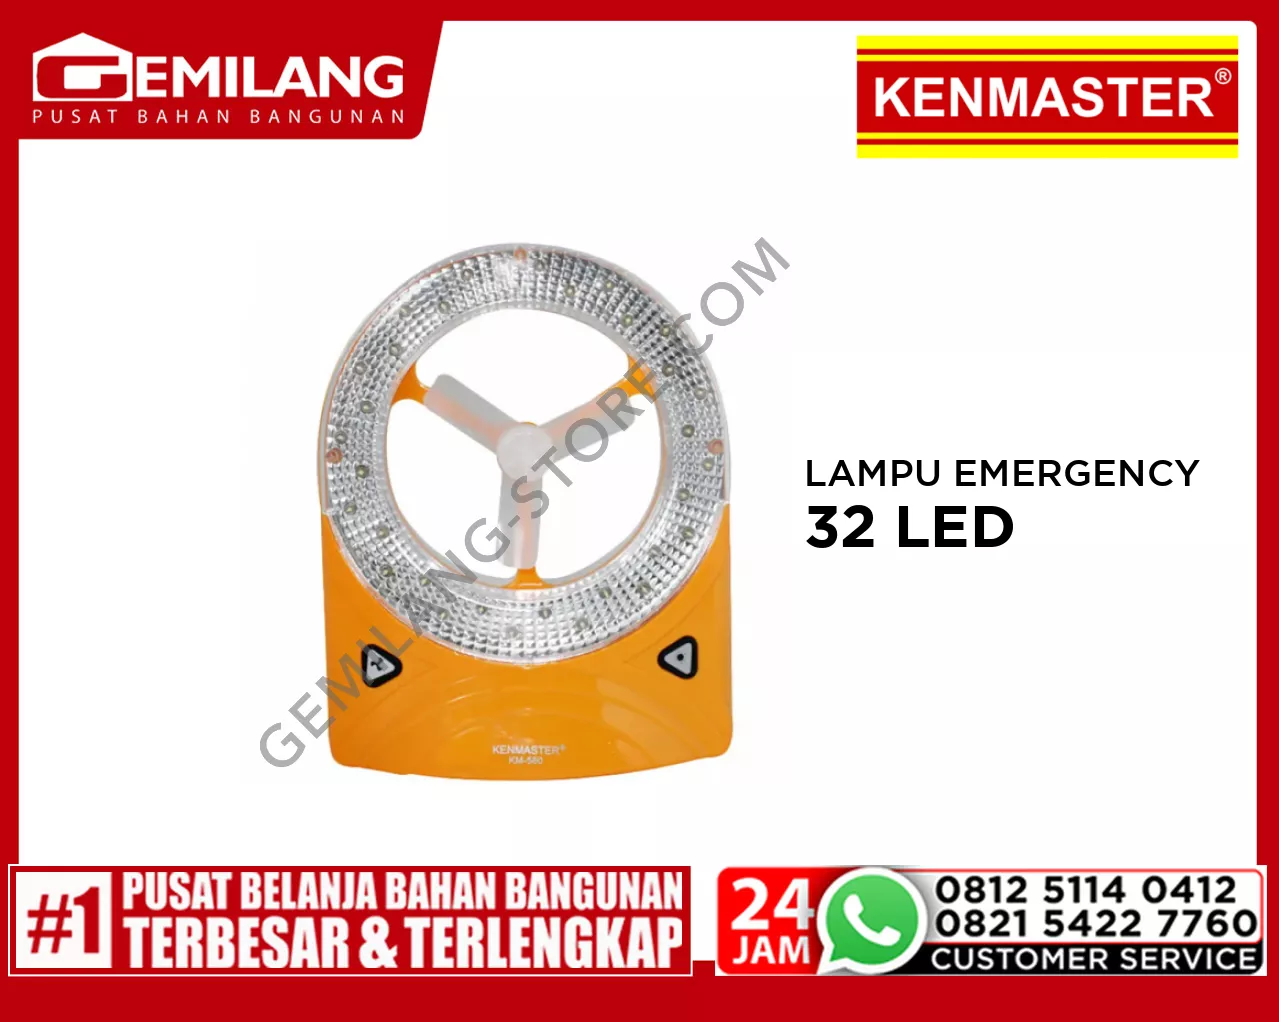 KENMASTER LAMPU EMERGENCY + KIPAS 32 LED KM 560